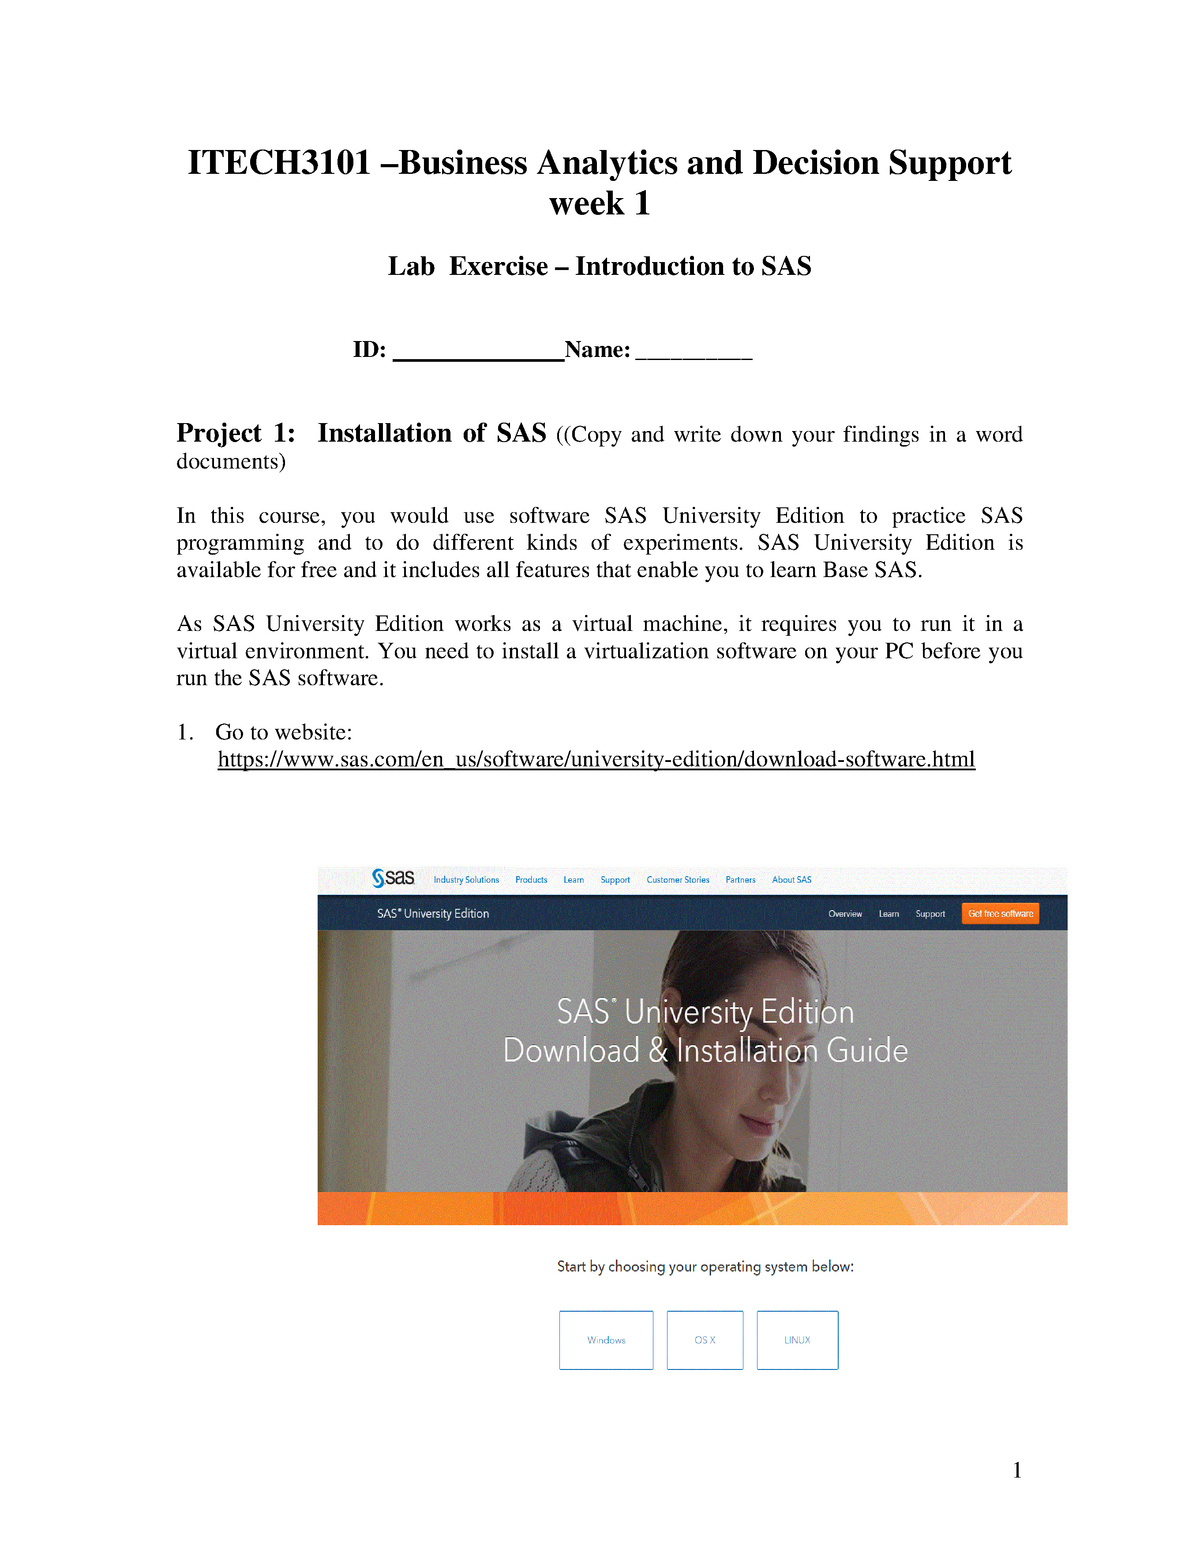 sas university edition tutorial pdf